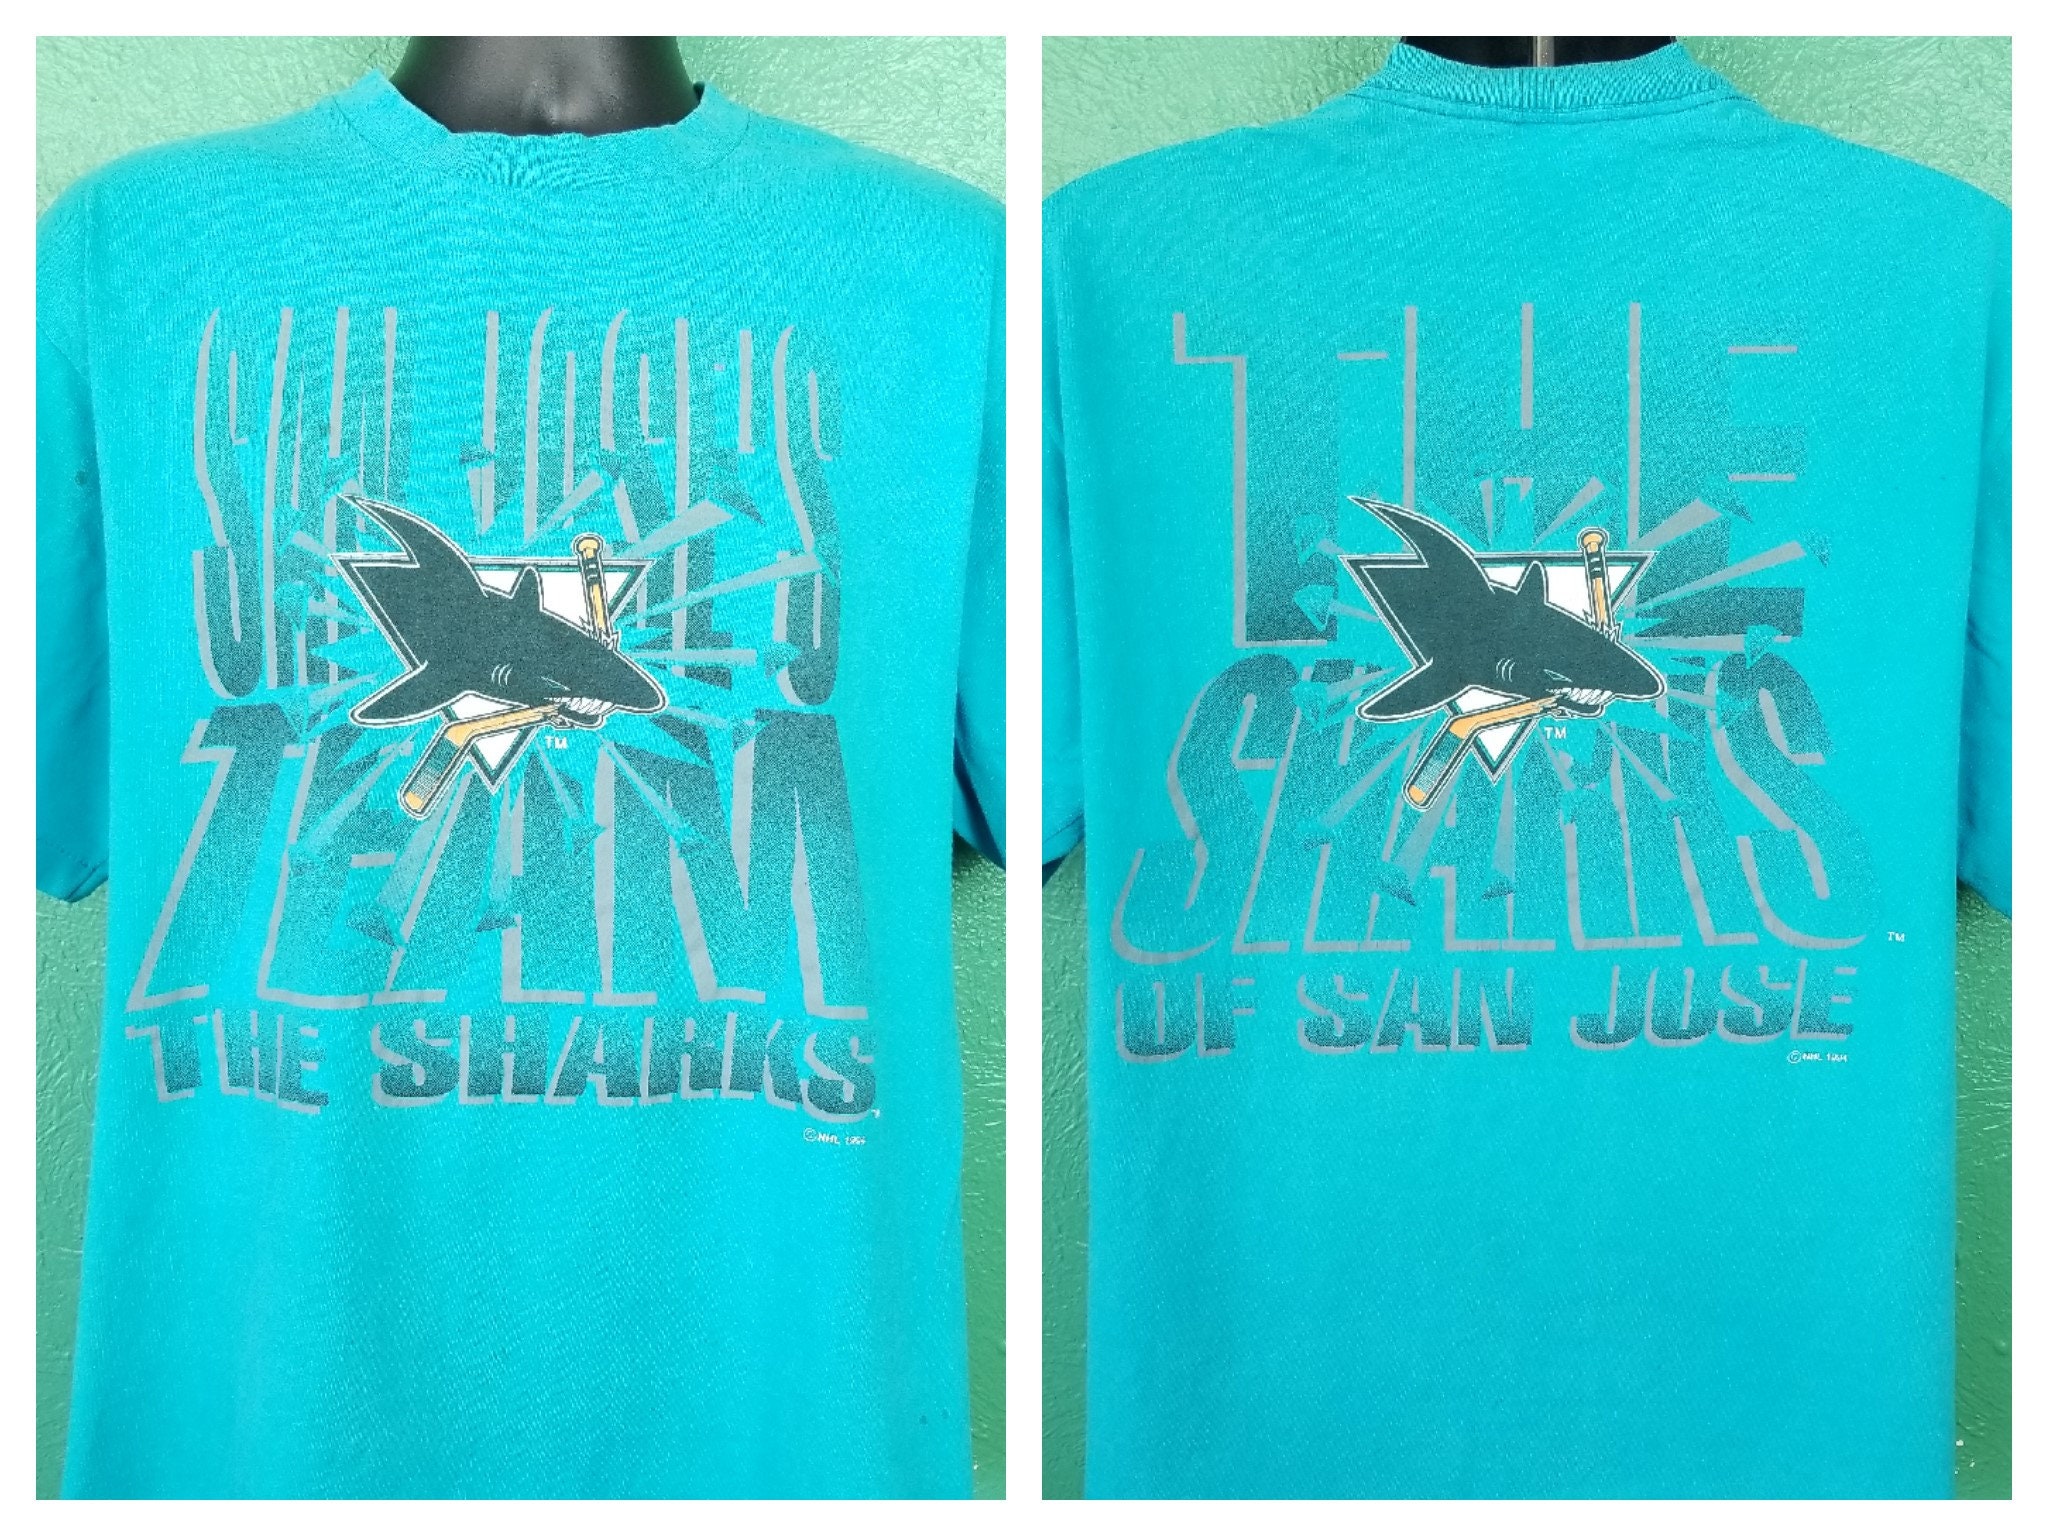 San Jose 408 Shirt, Shark City,Hella San Jose, Shark Tank Sj T-Shirt